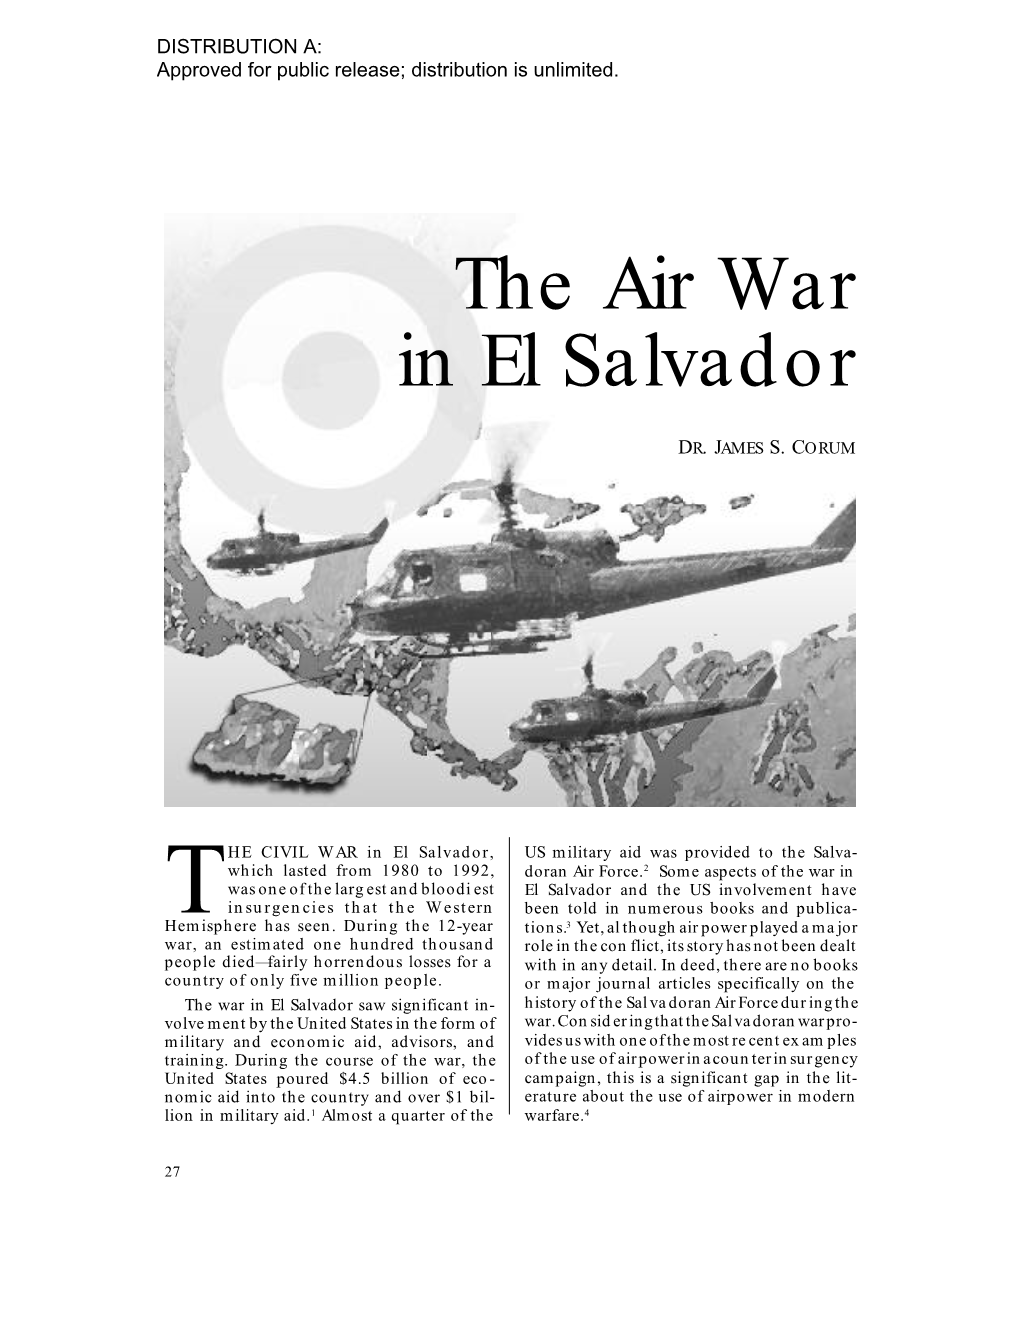 The Air War in El Salvador